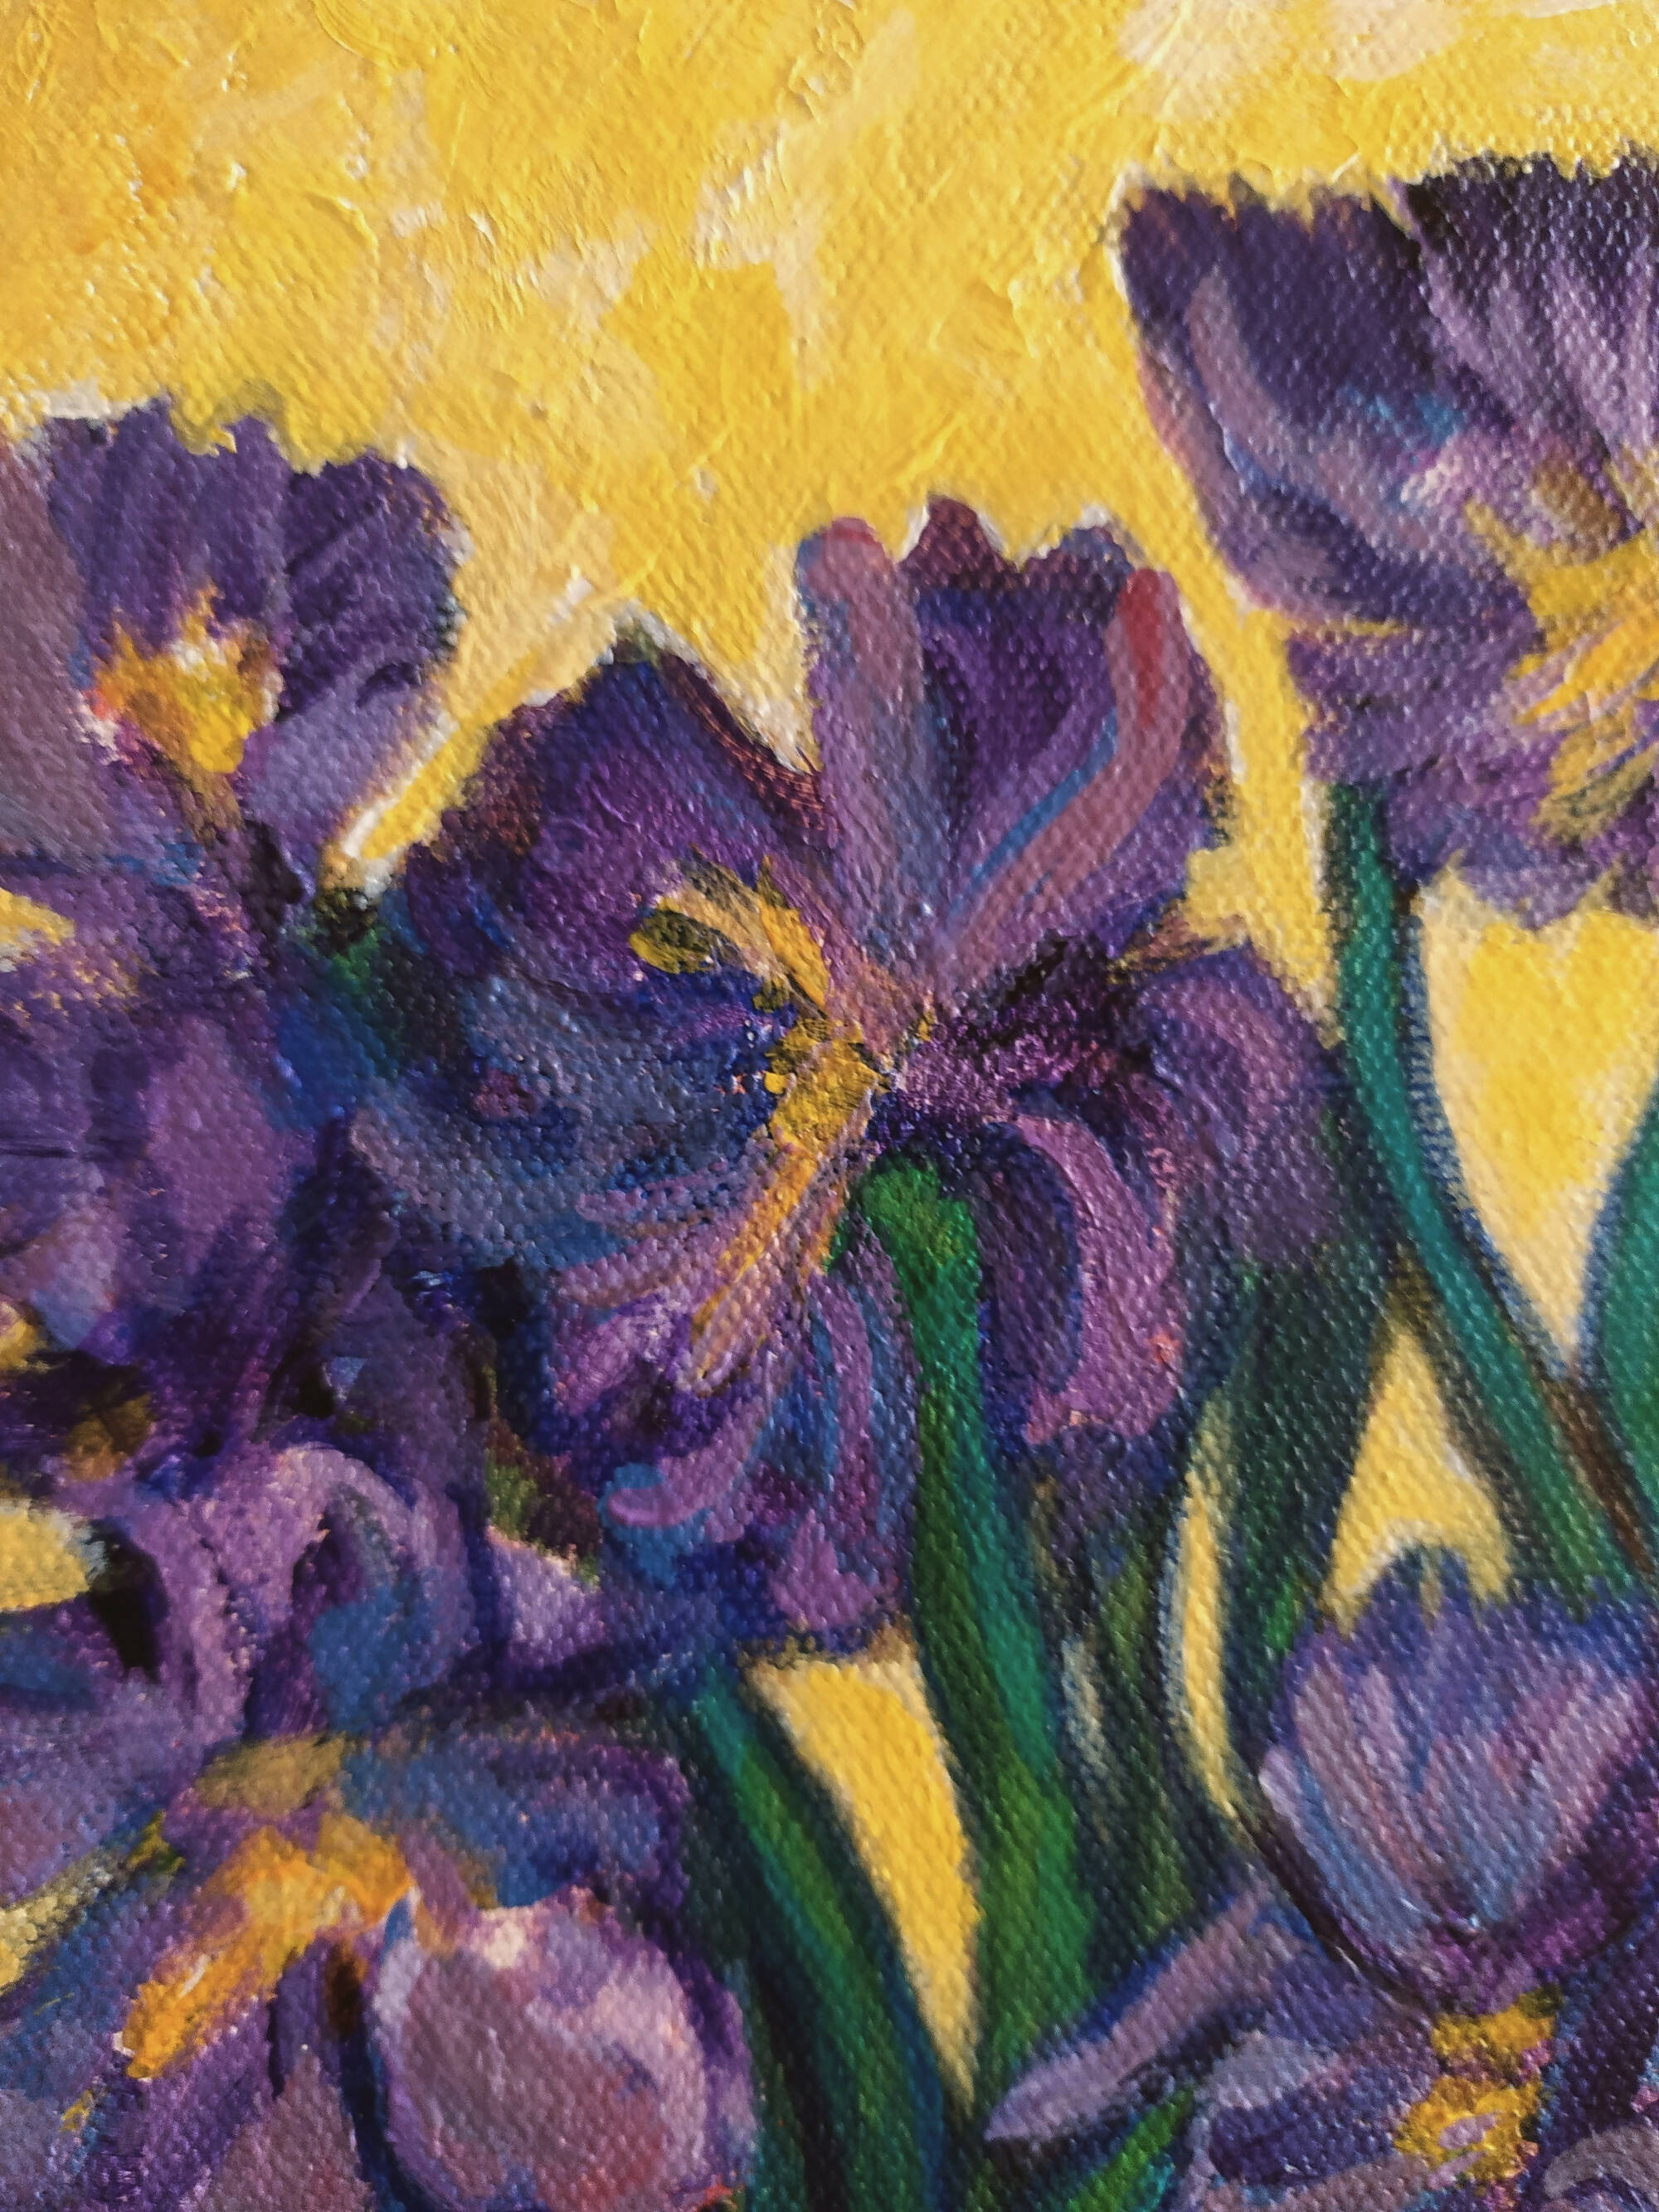 Iris painting, acrylic painting on canvas panel